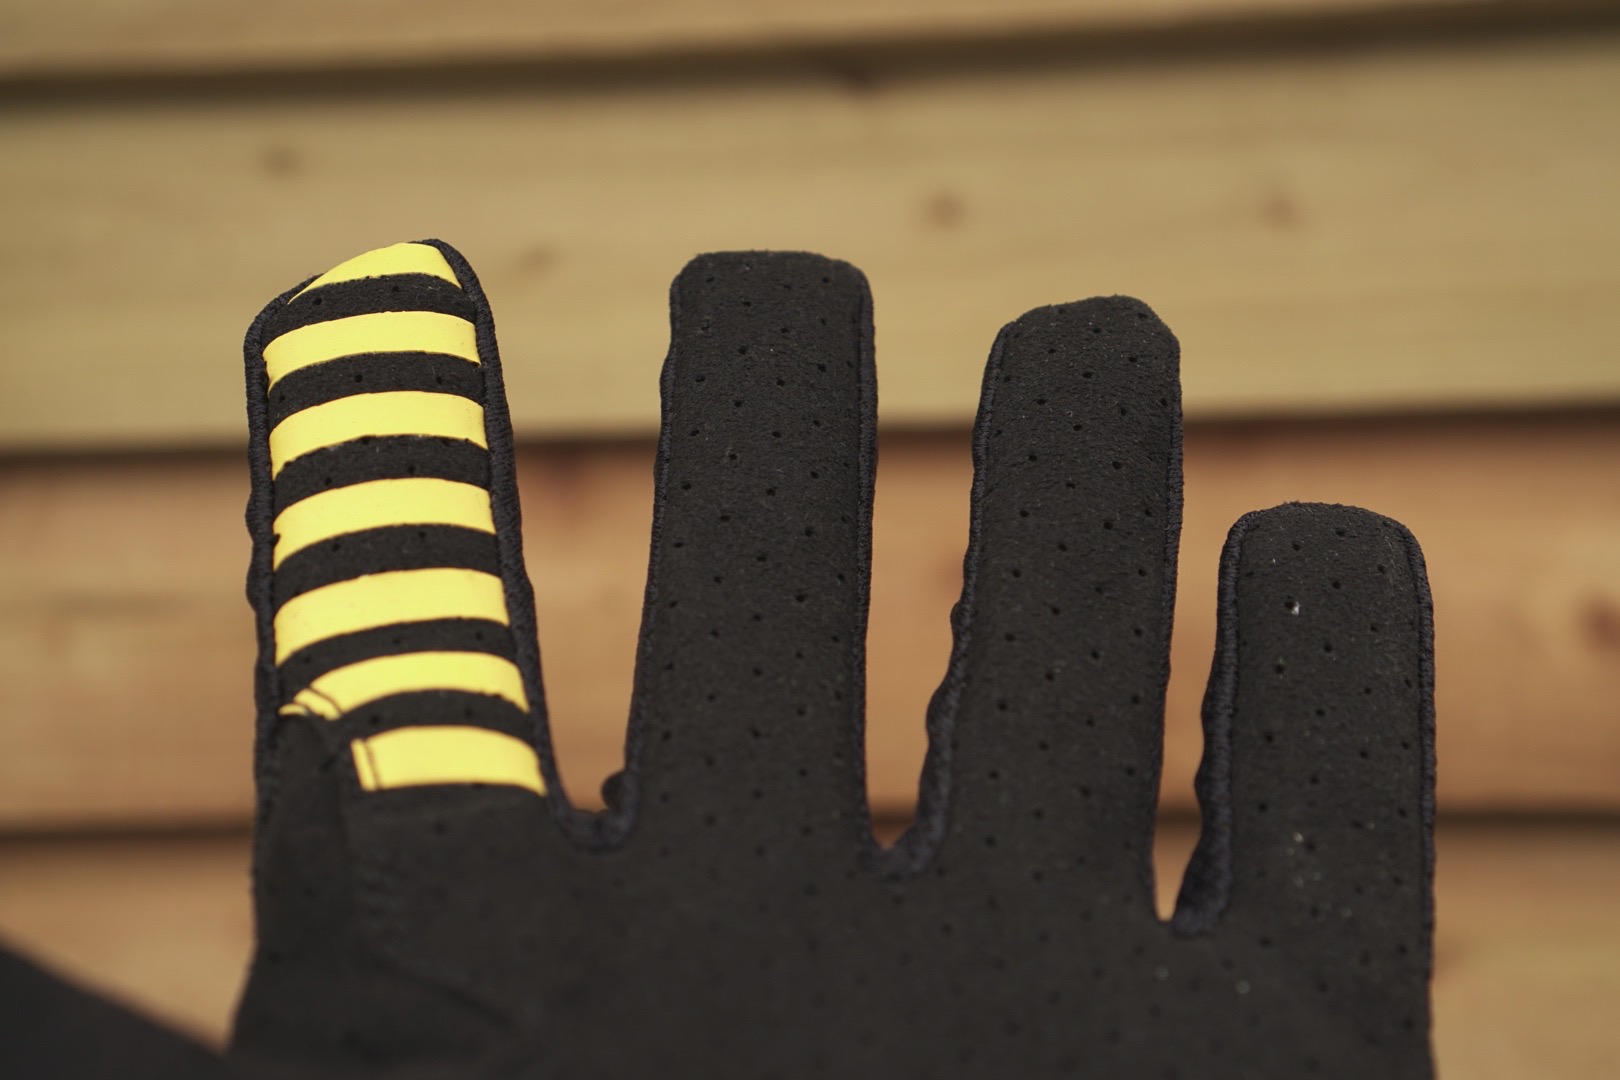 Nukeproof summer gloves